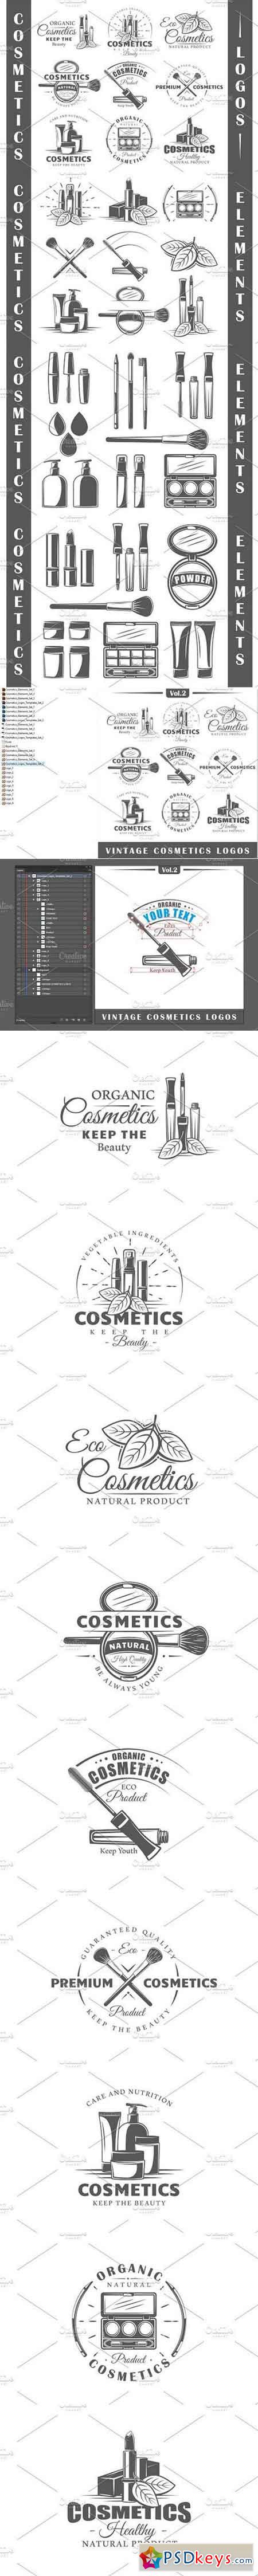 9 Cosmetics Logos Templates Vol.2 1494956